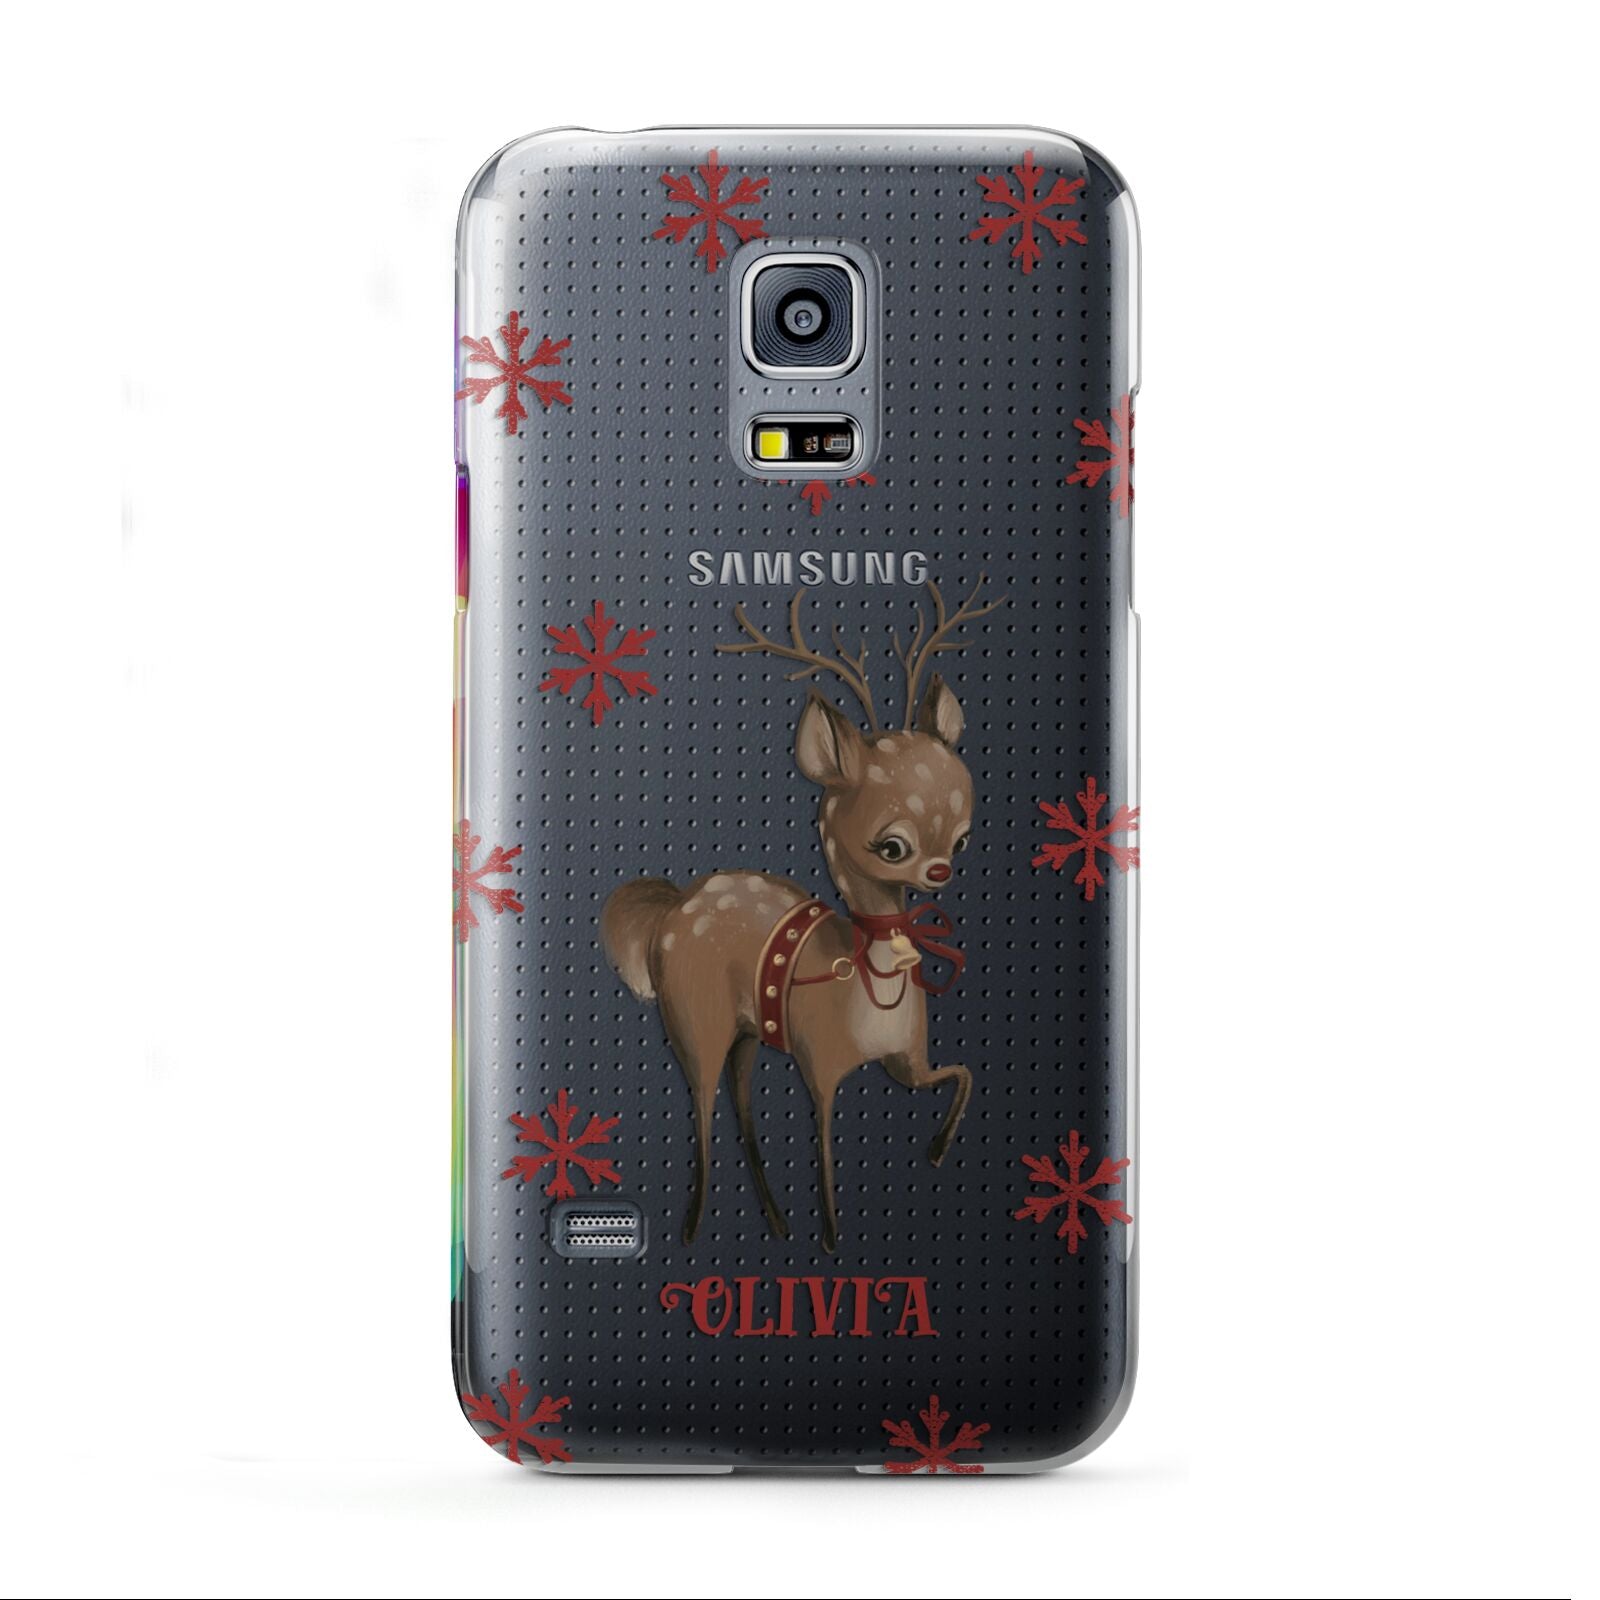 Rudolph Delivery Samsung Galaxy S5 Mini Case